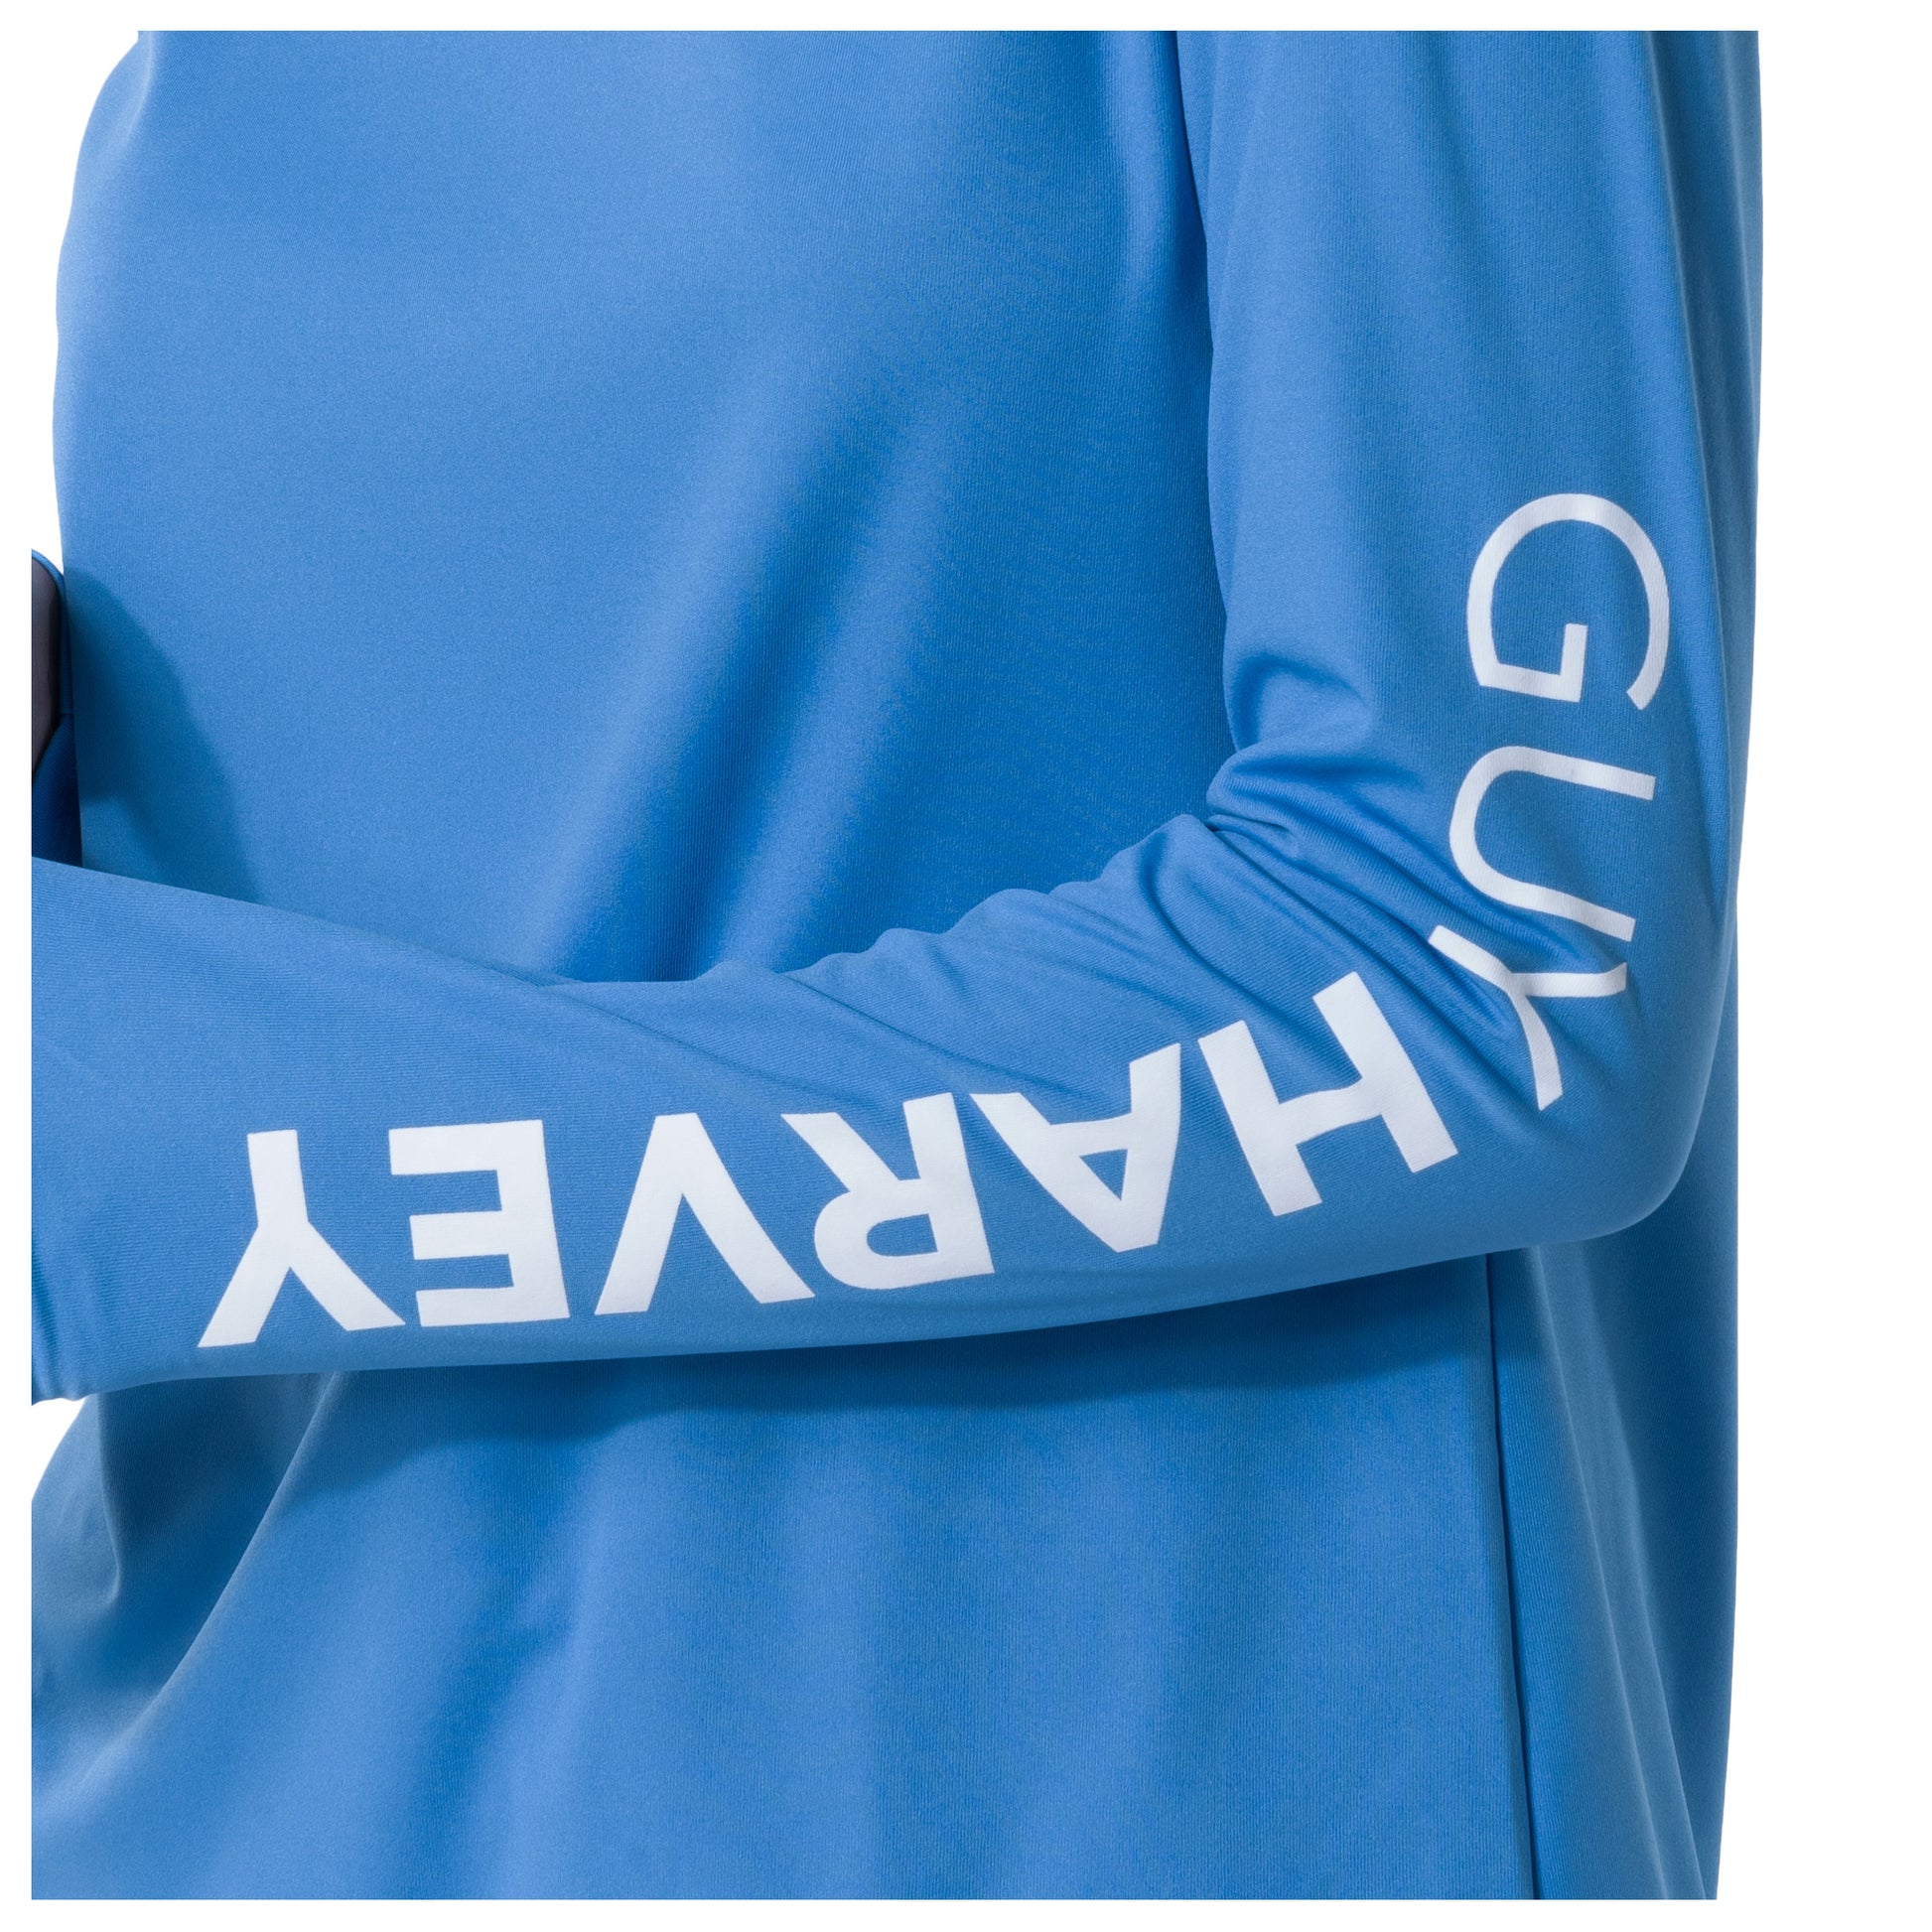 Women's Hoodie Shirts UPF 50+ Sun Protection Long Sleeve UV Shirt